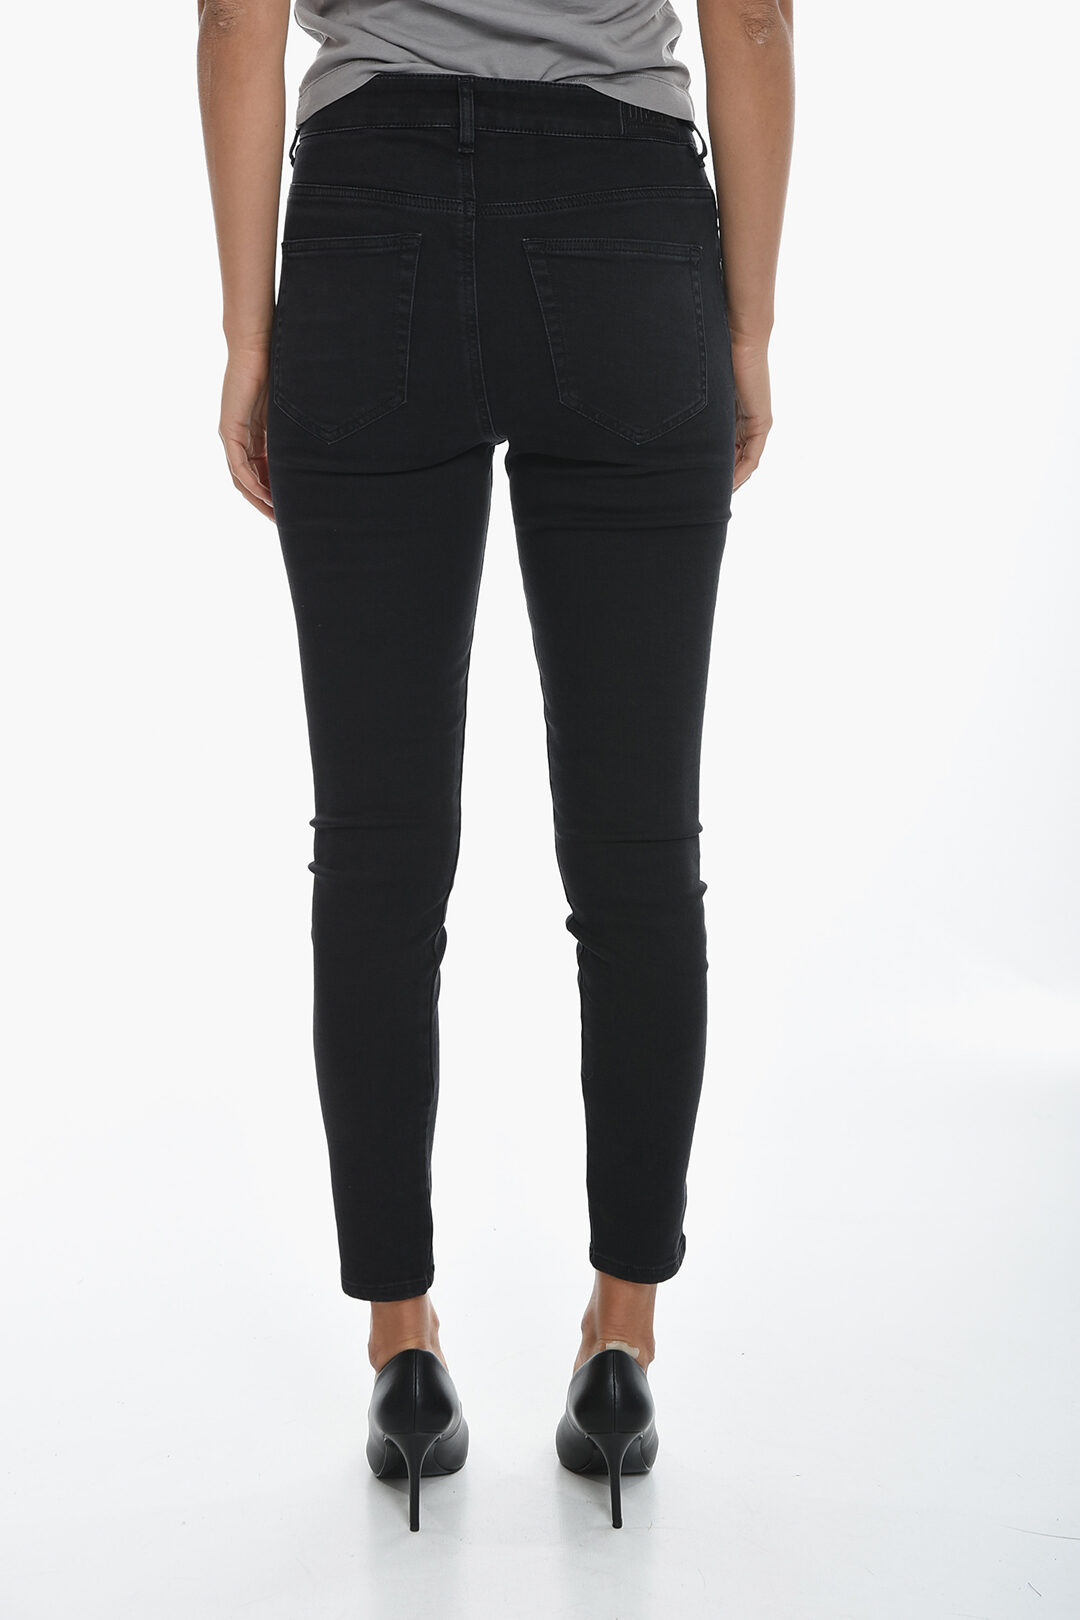 Women's Super Skinny Jeans: Slandy, Slandy-High